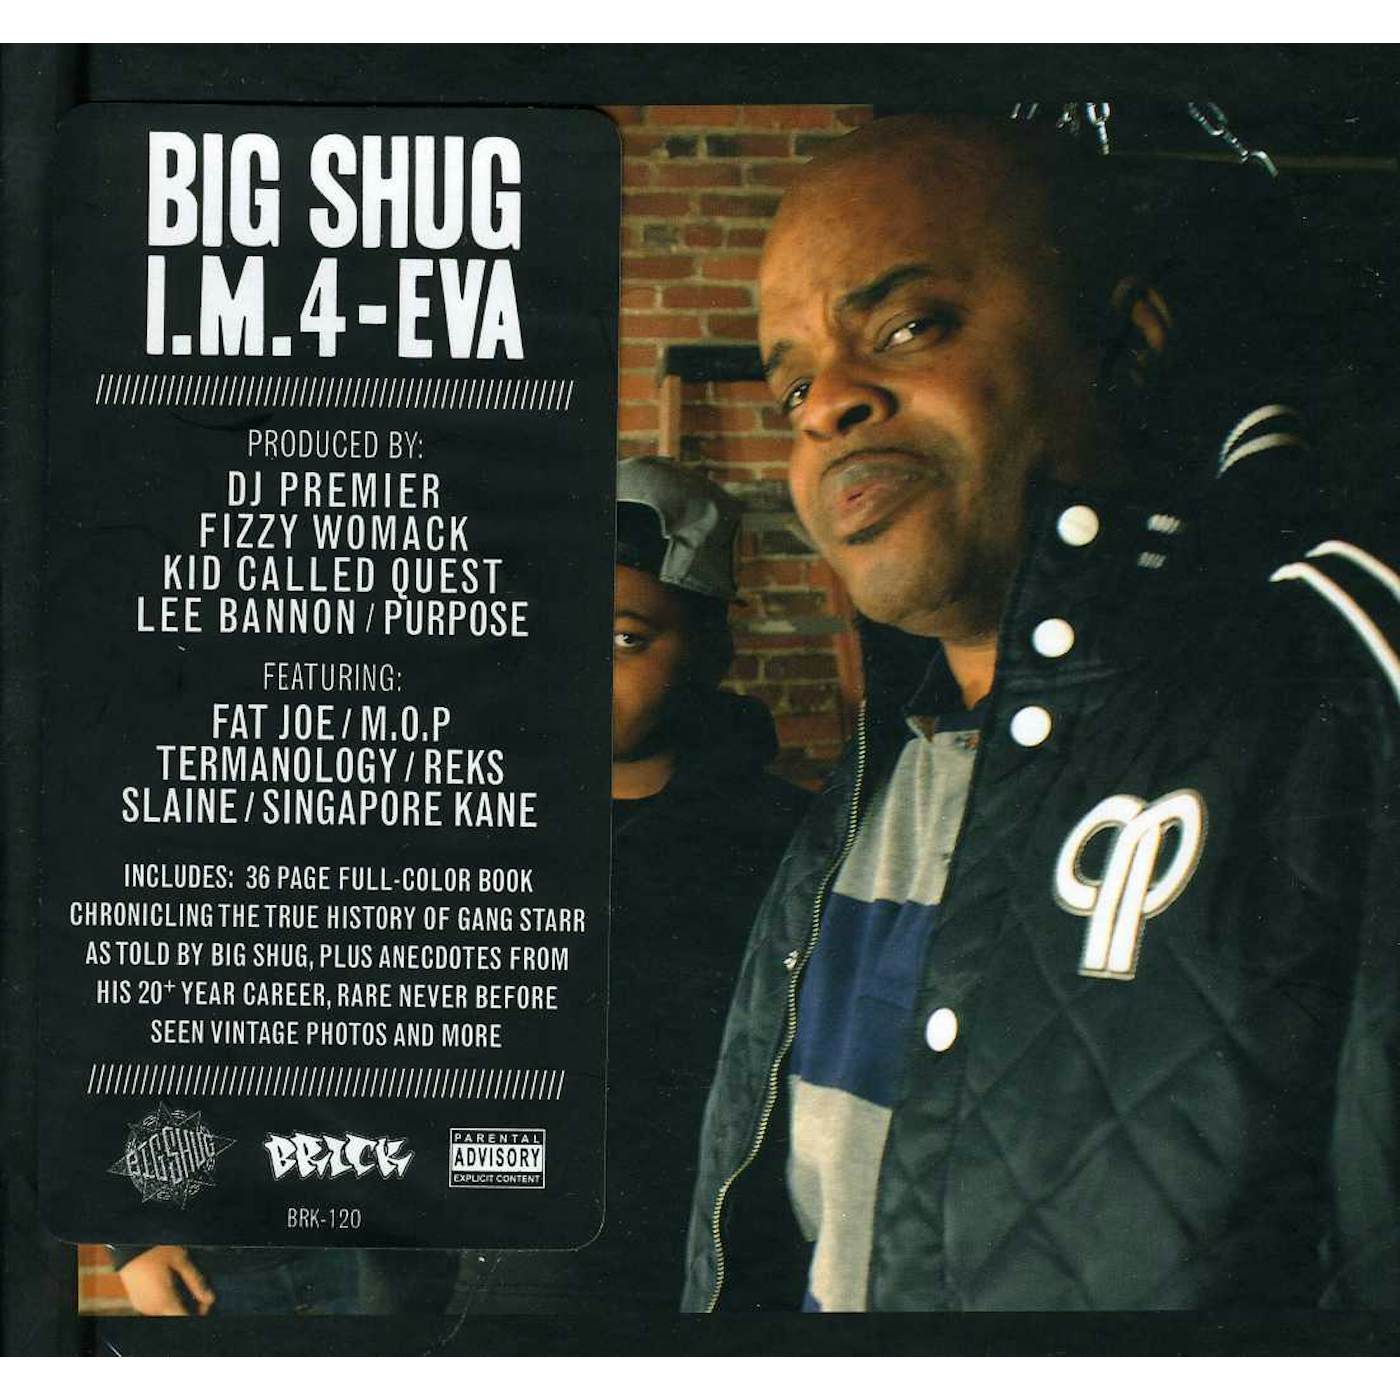 Big Shug I.M. 4-EVA CD